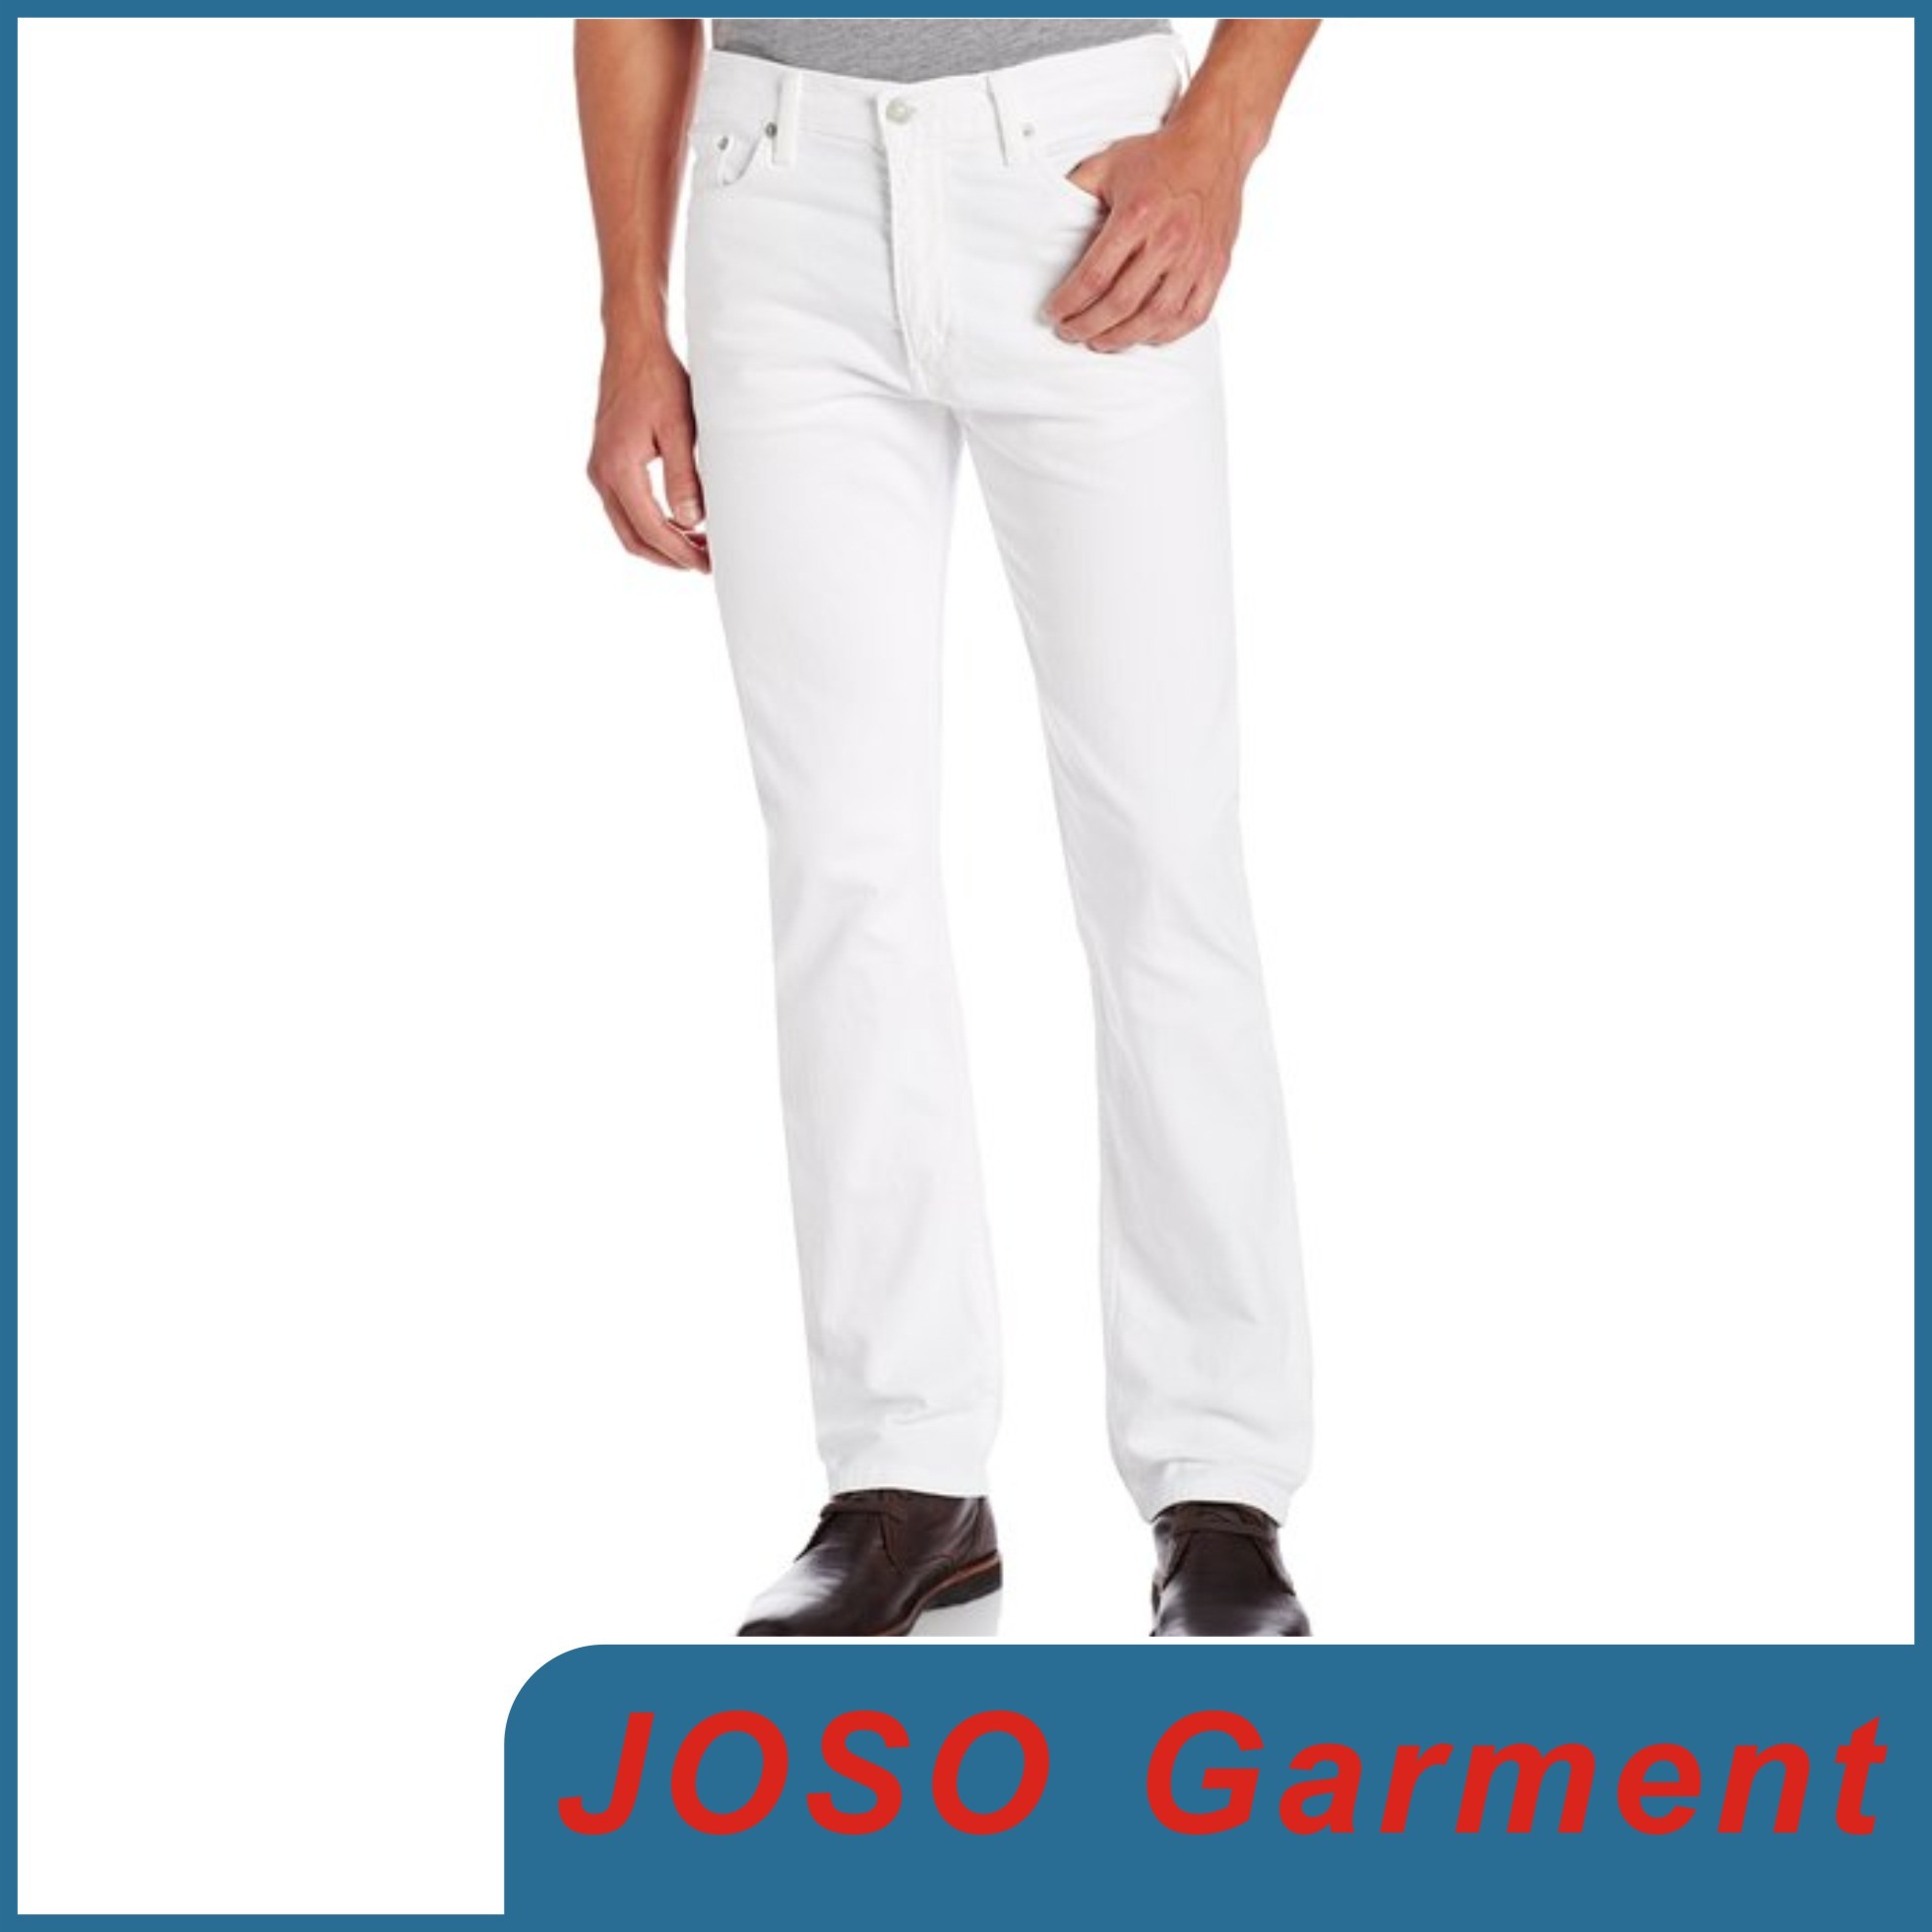 Wholesale Men White Denim Jeans (JC3050)